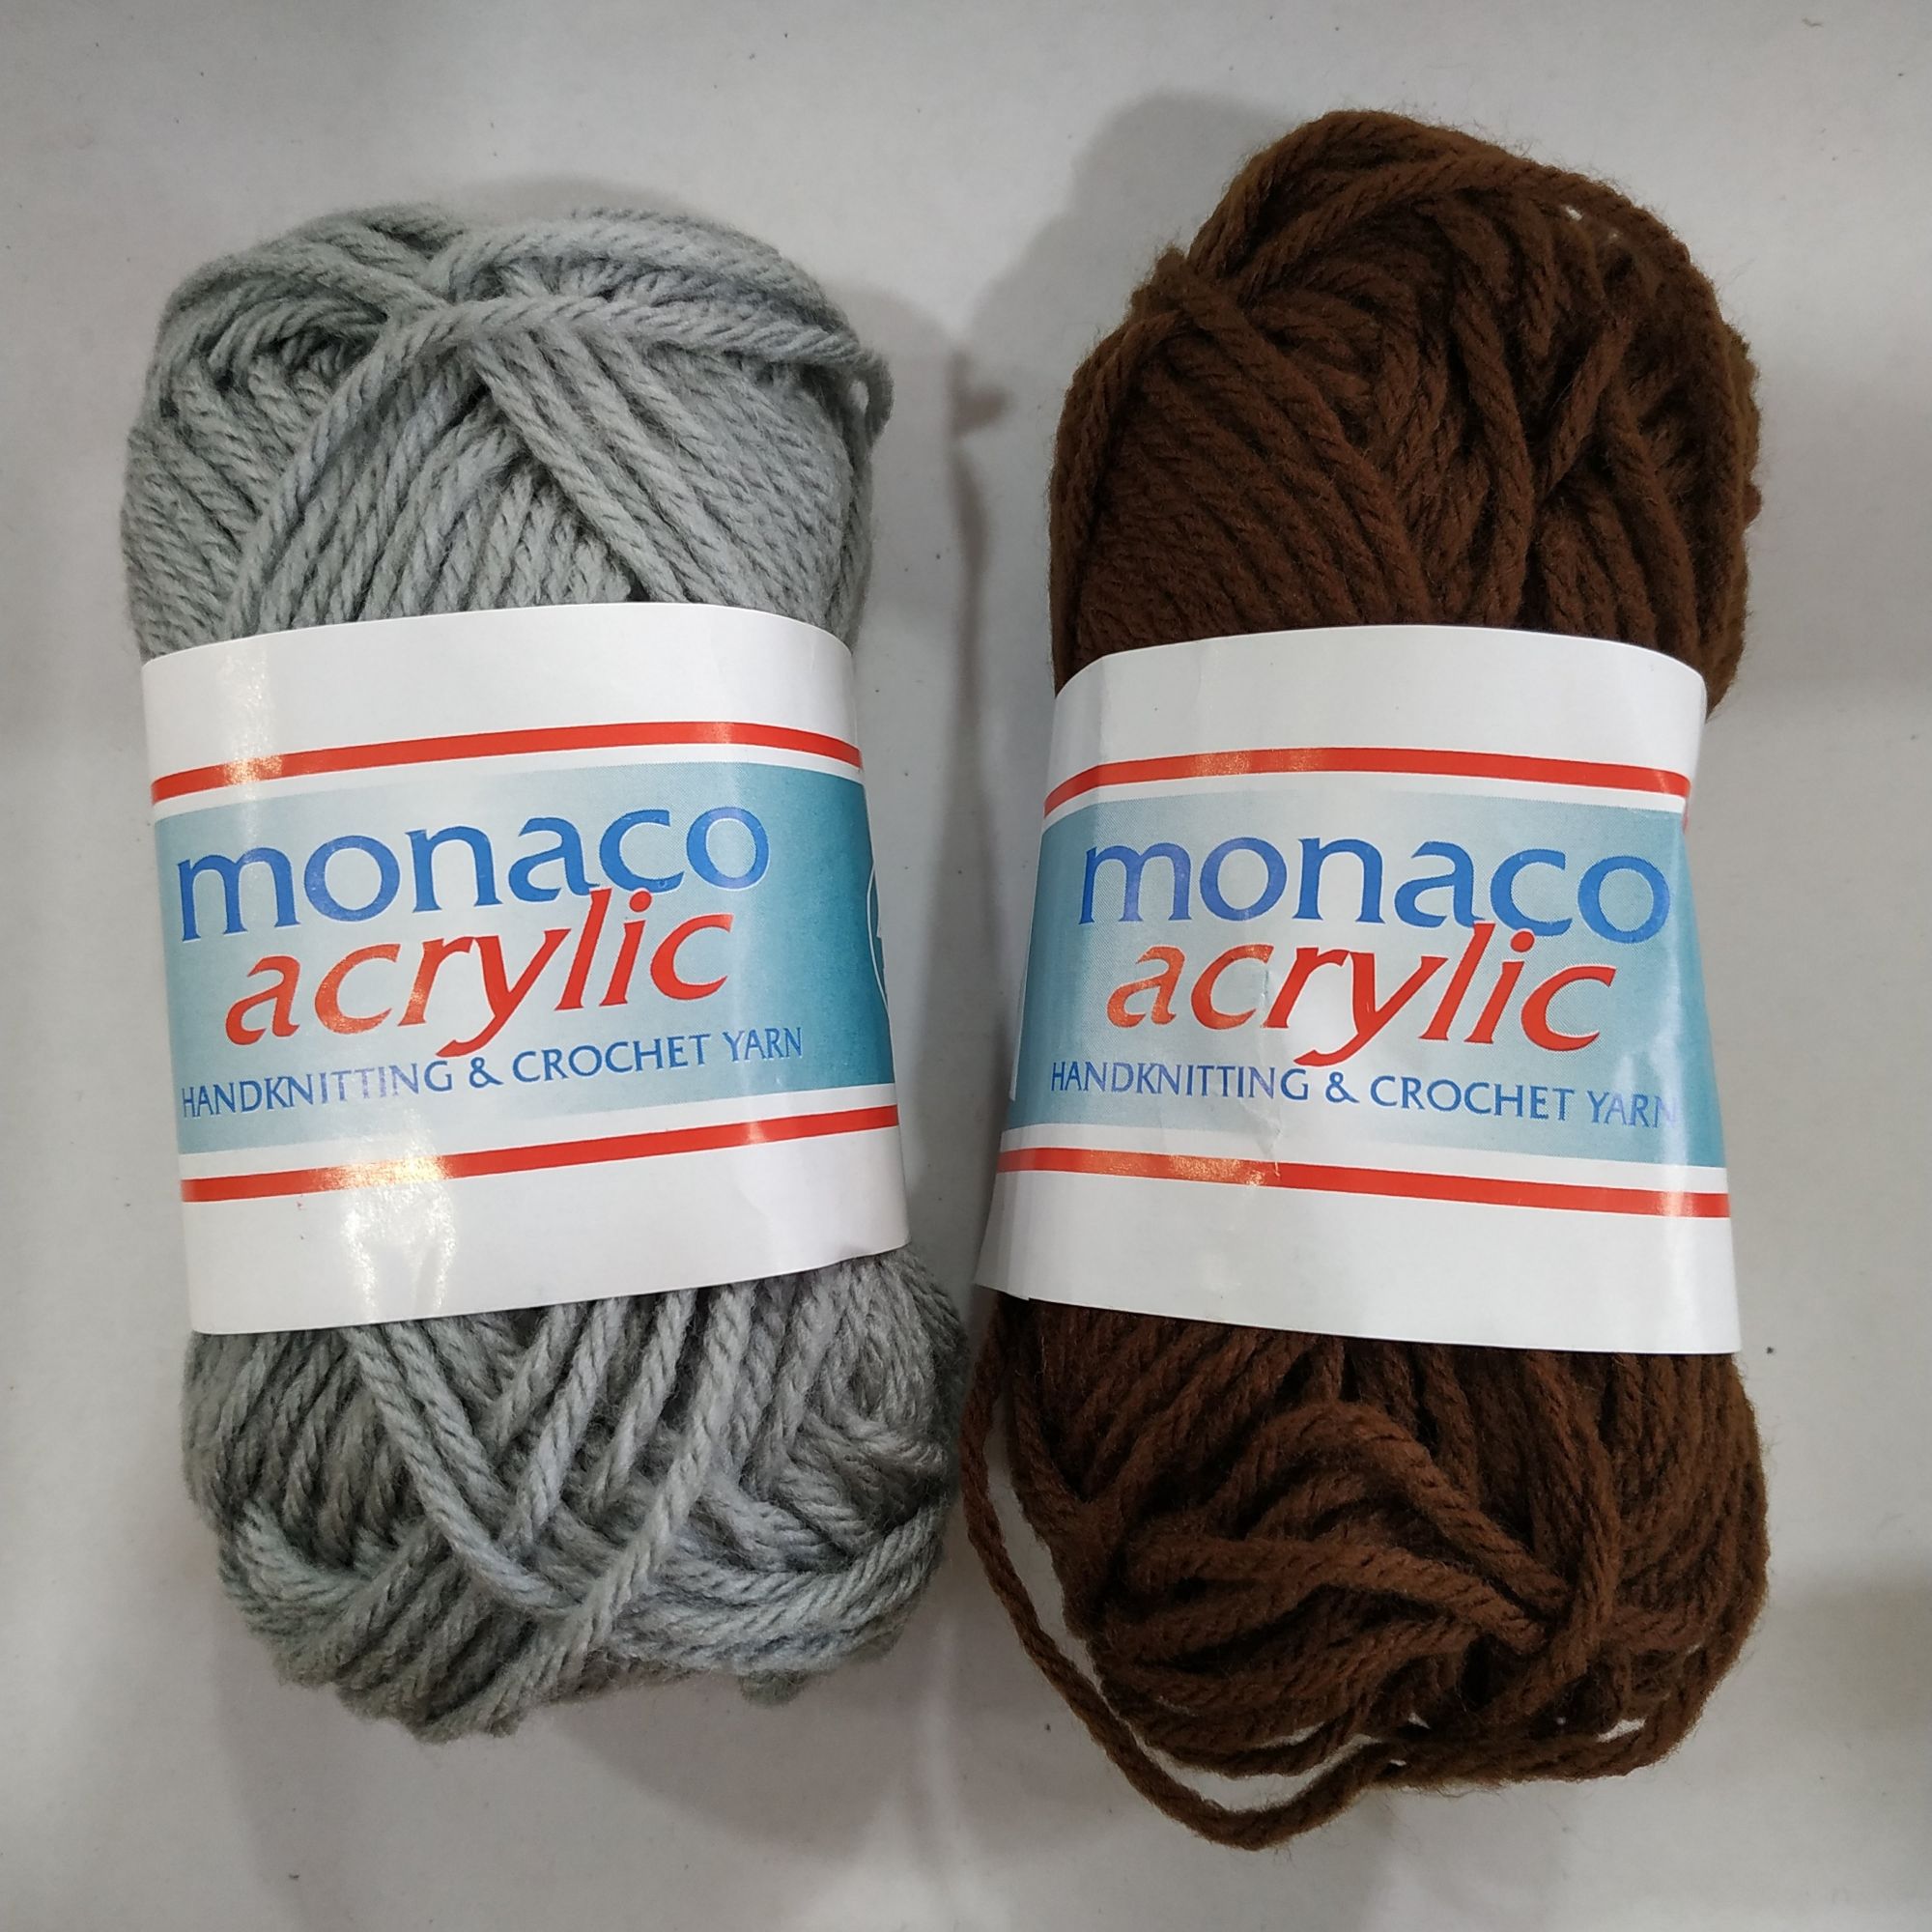 Crochet Beginner Kit/Set Monaco Acrylic Yarn - SewandStitch